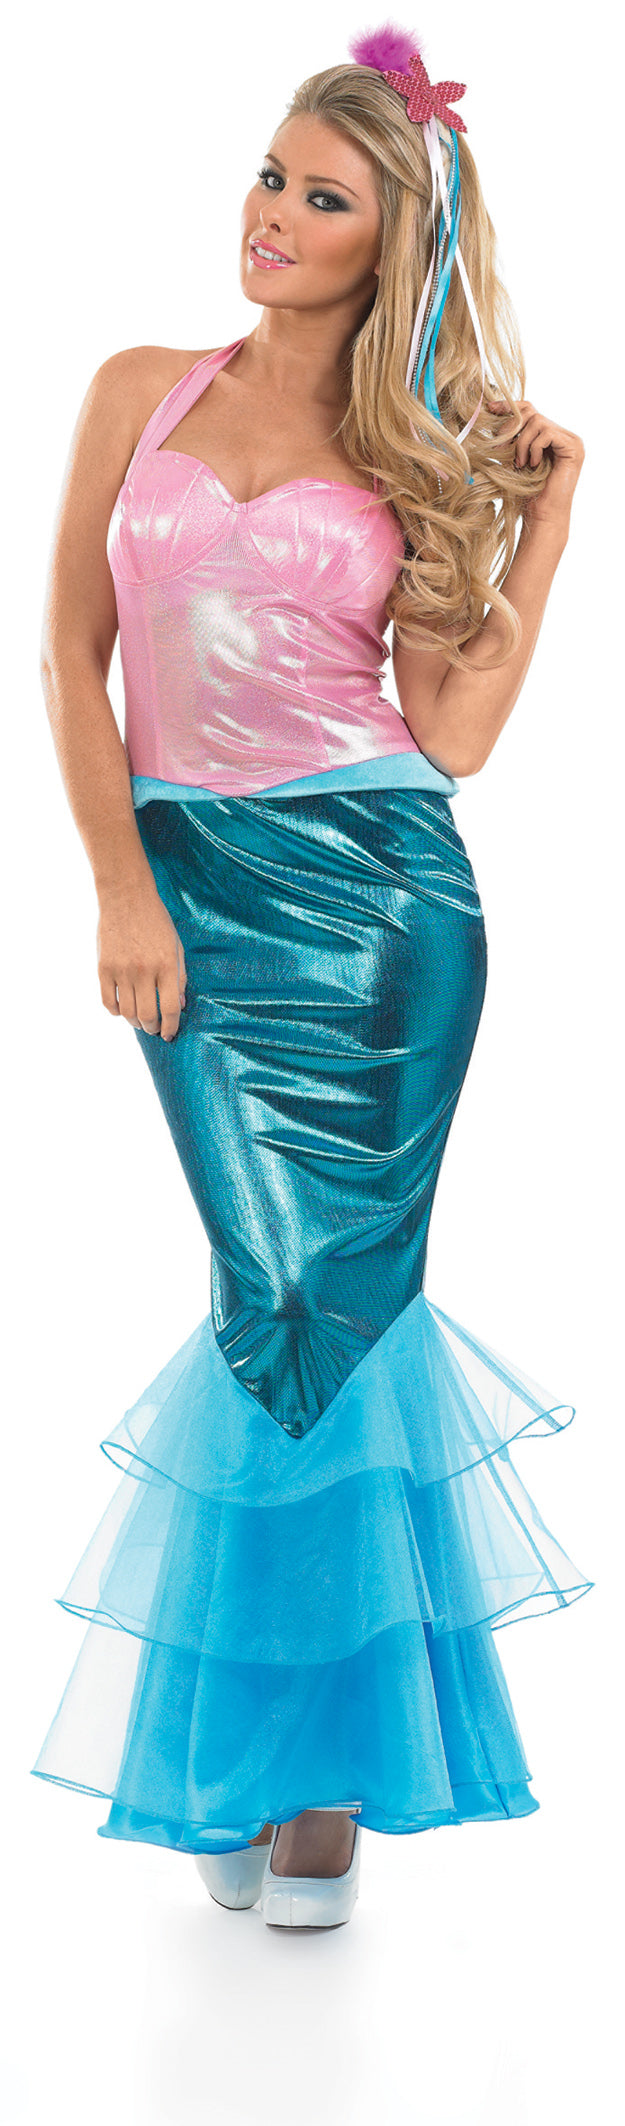 Ladies Sexy Mermaid Fairytale Fancy Dress Costume